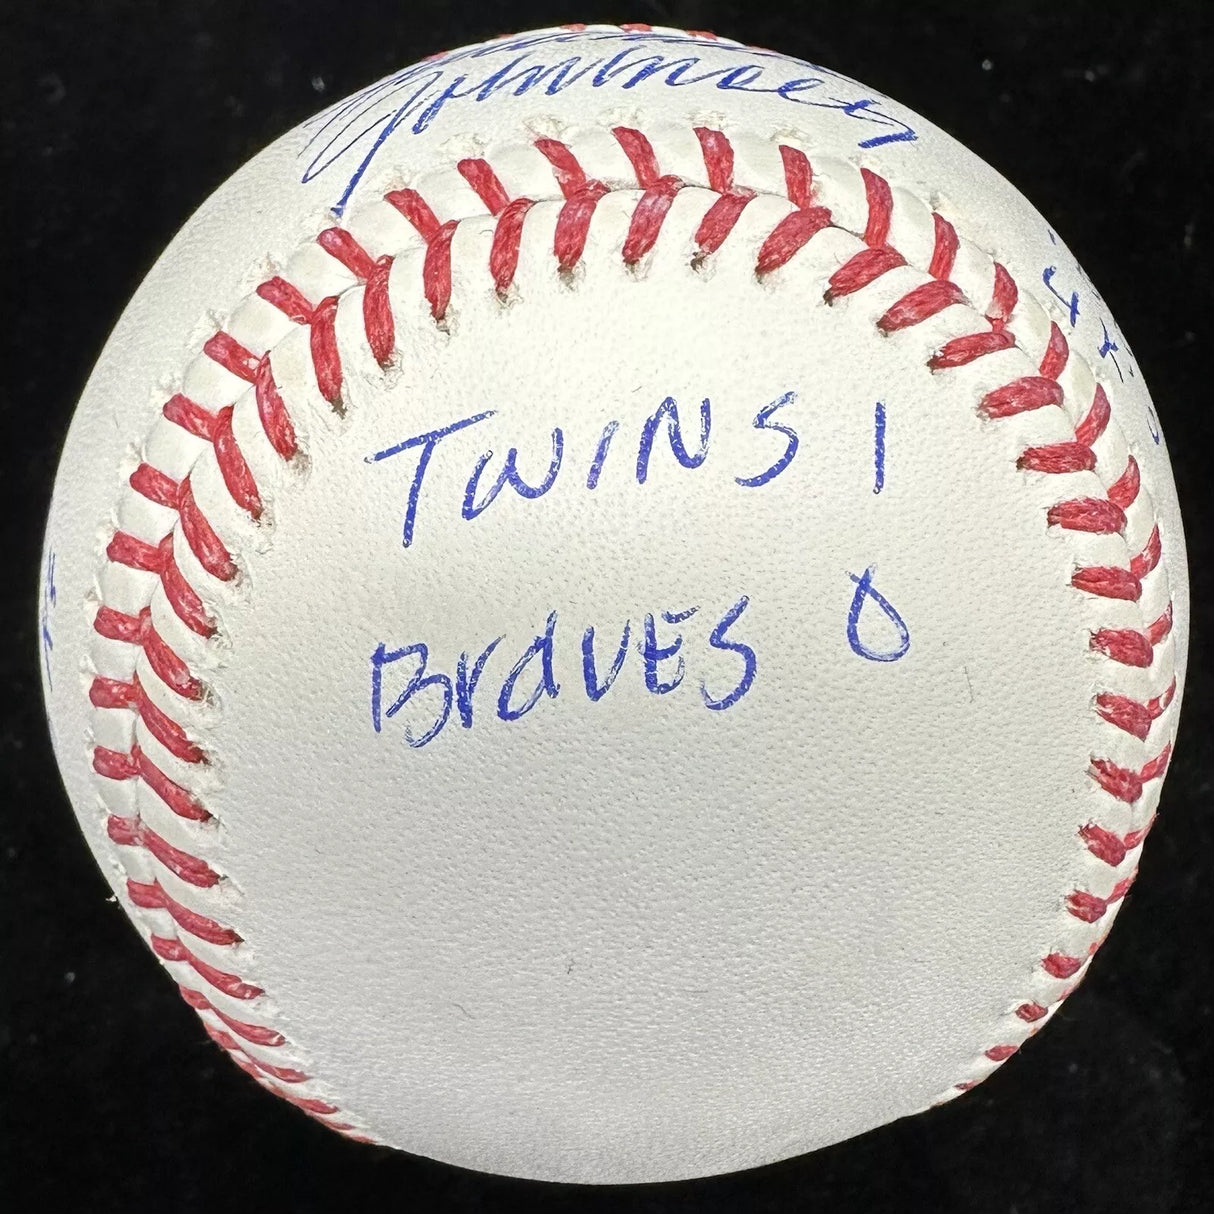 Jack Morris John Smoltz 1991 World Series Game 7 Dual Signed Stat Baseball BAS